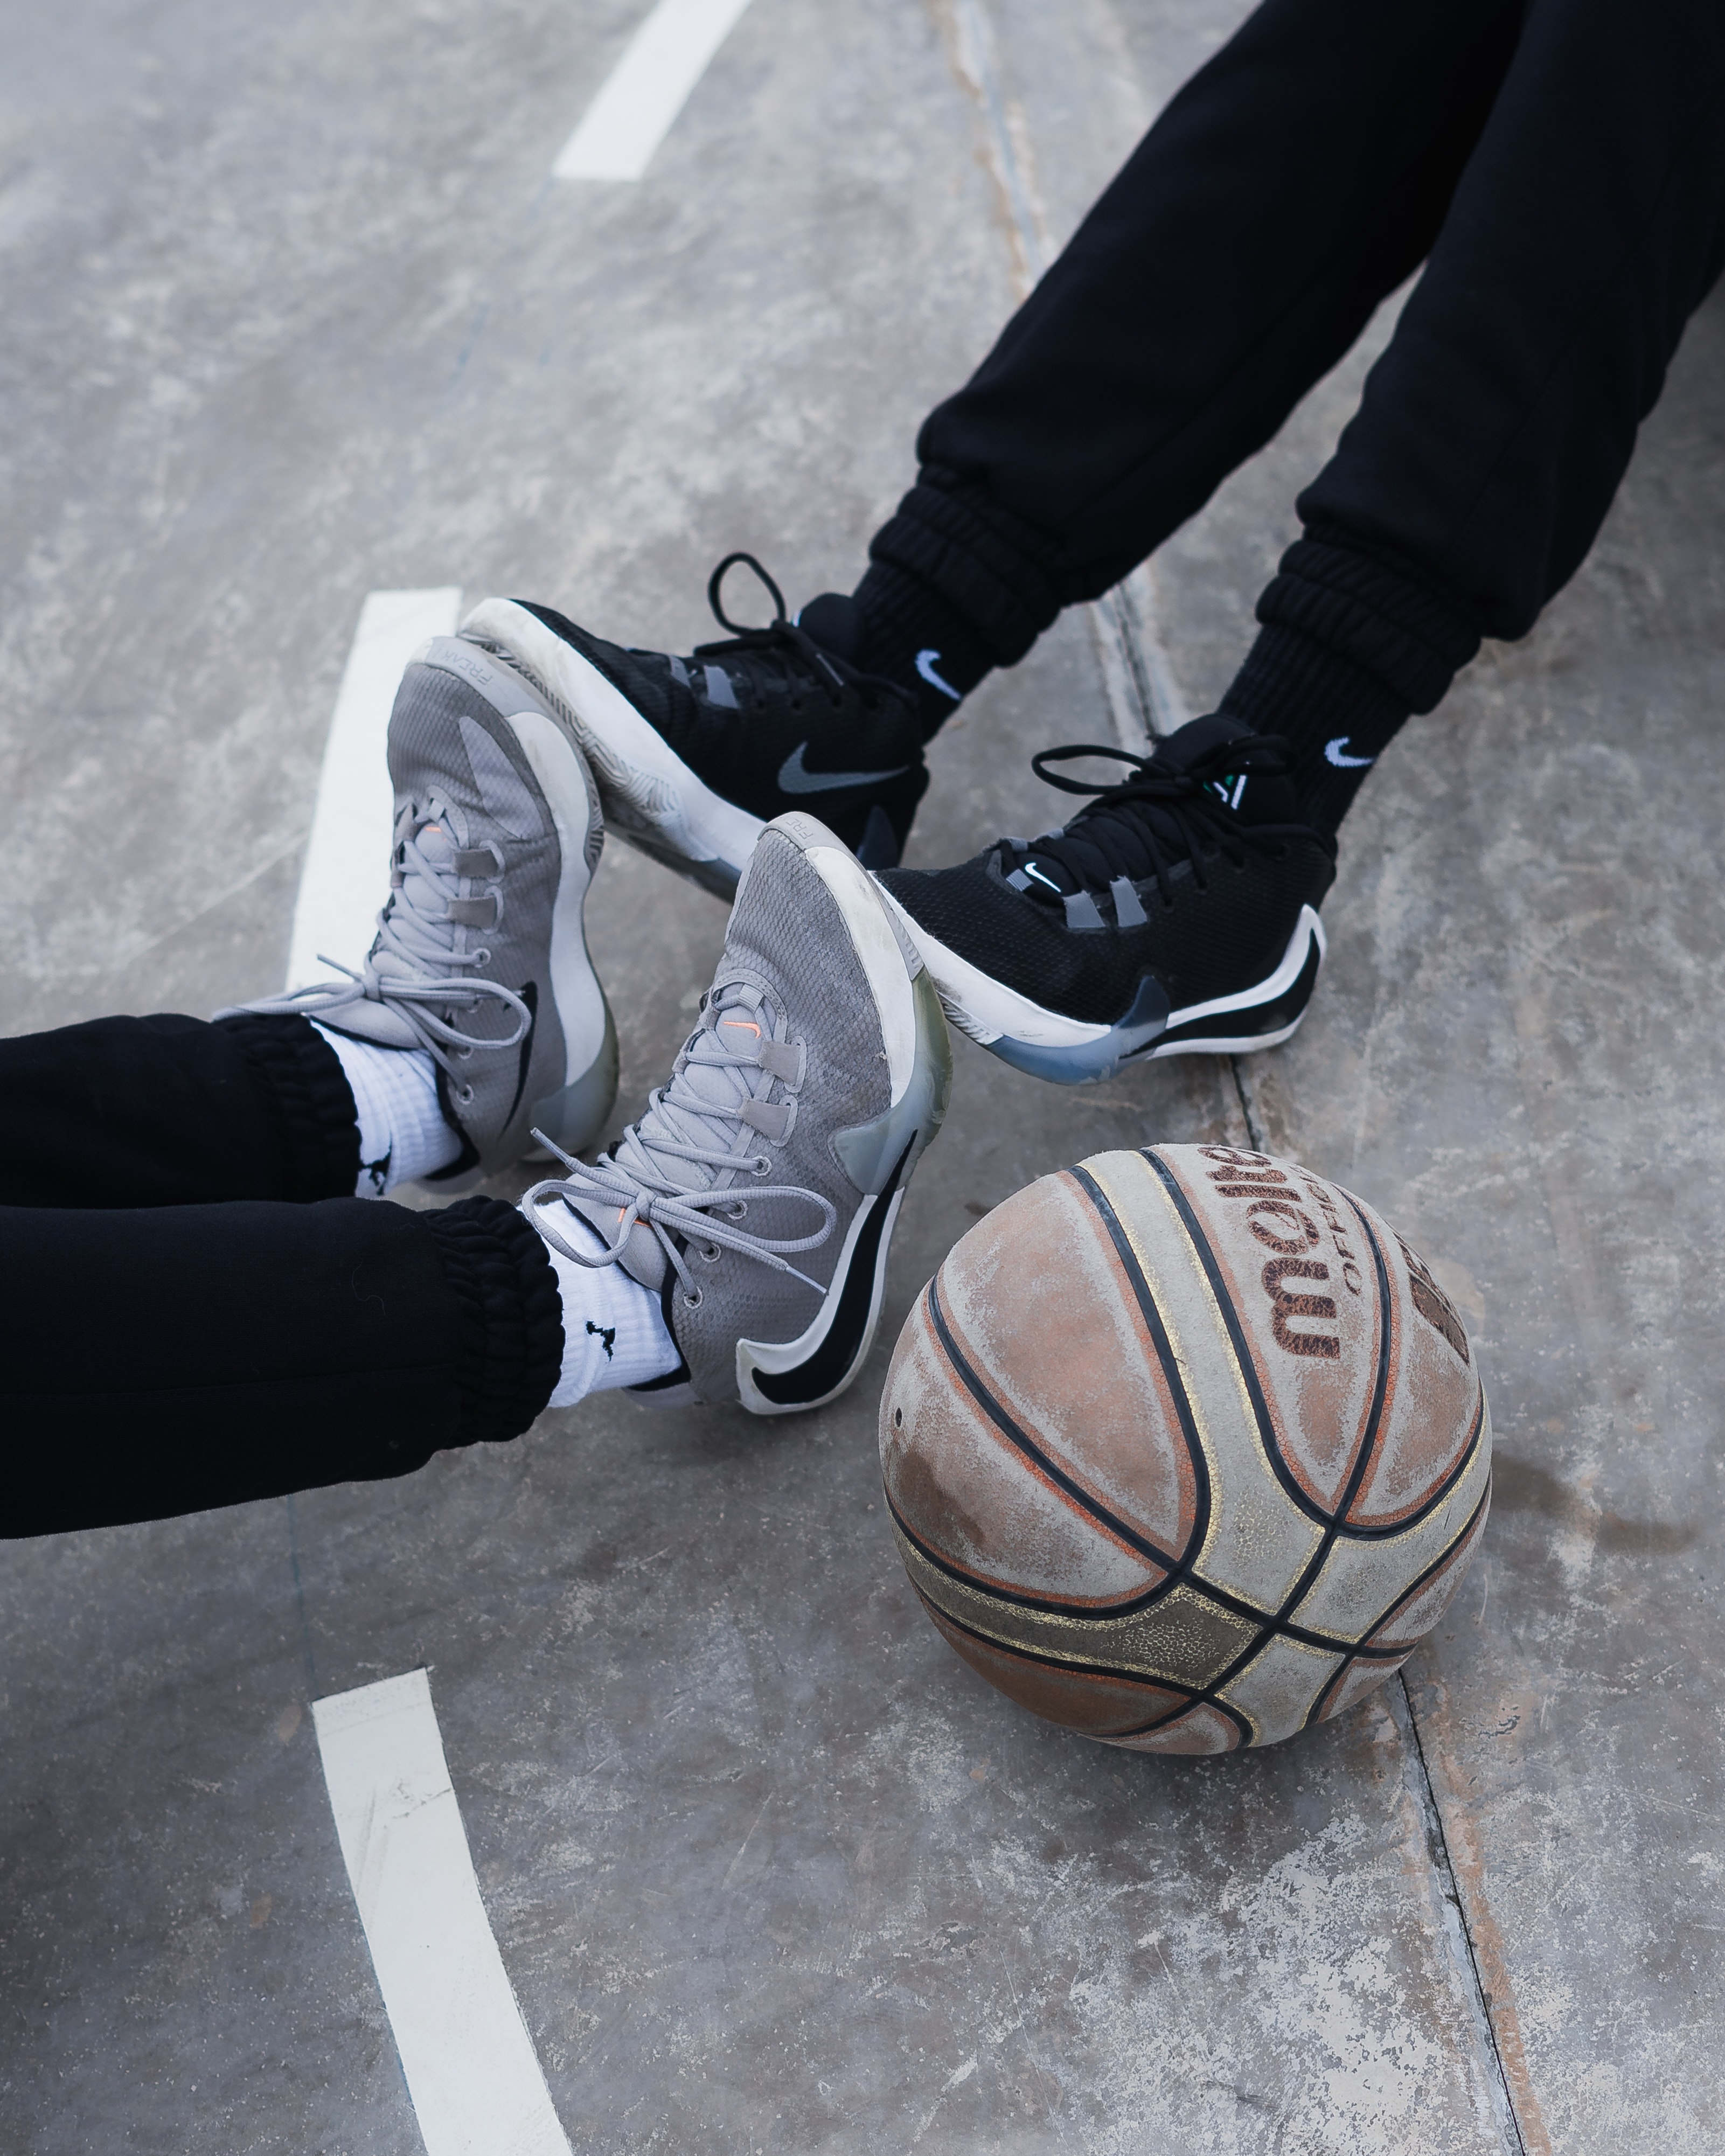 basketball, sneakers, sports, legs, ball